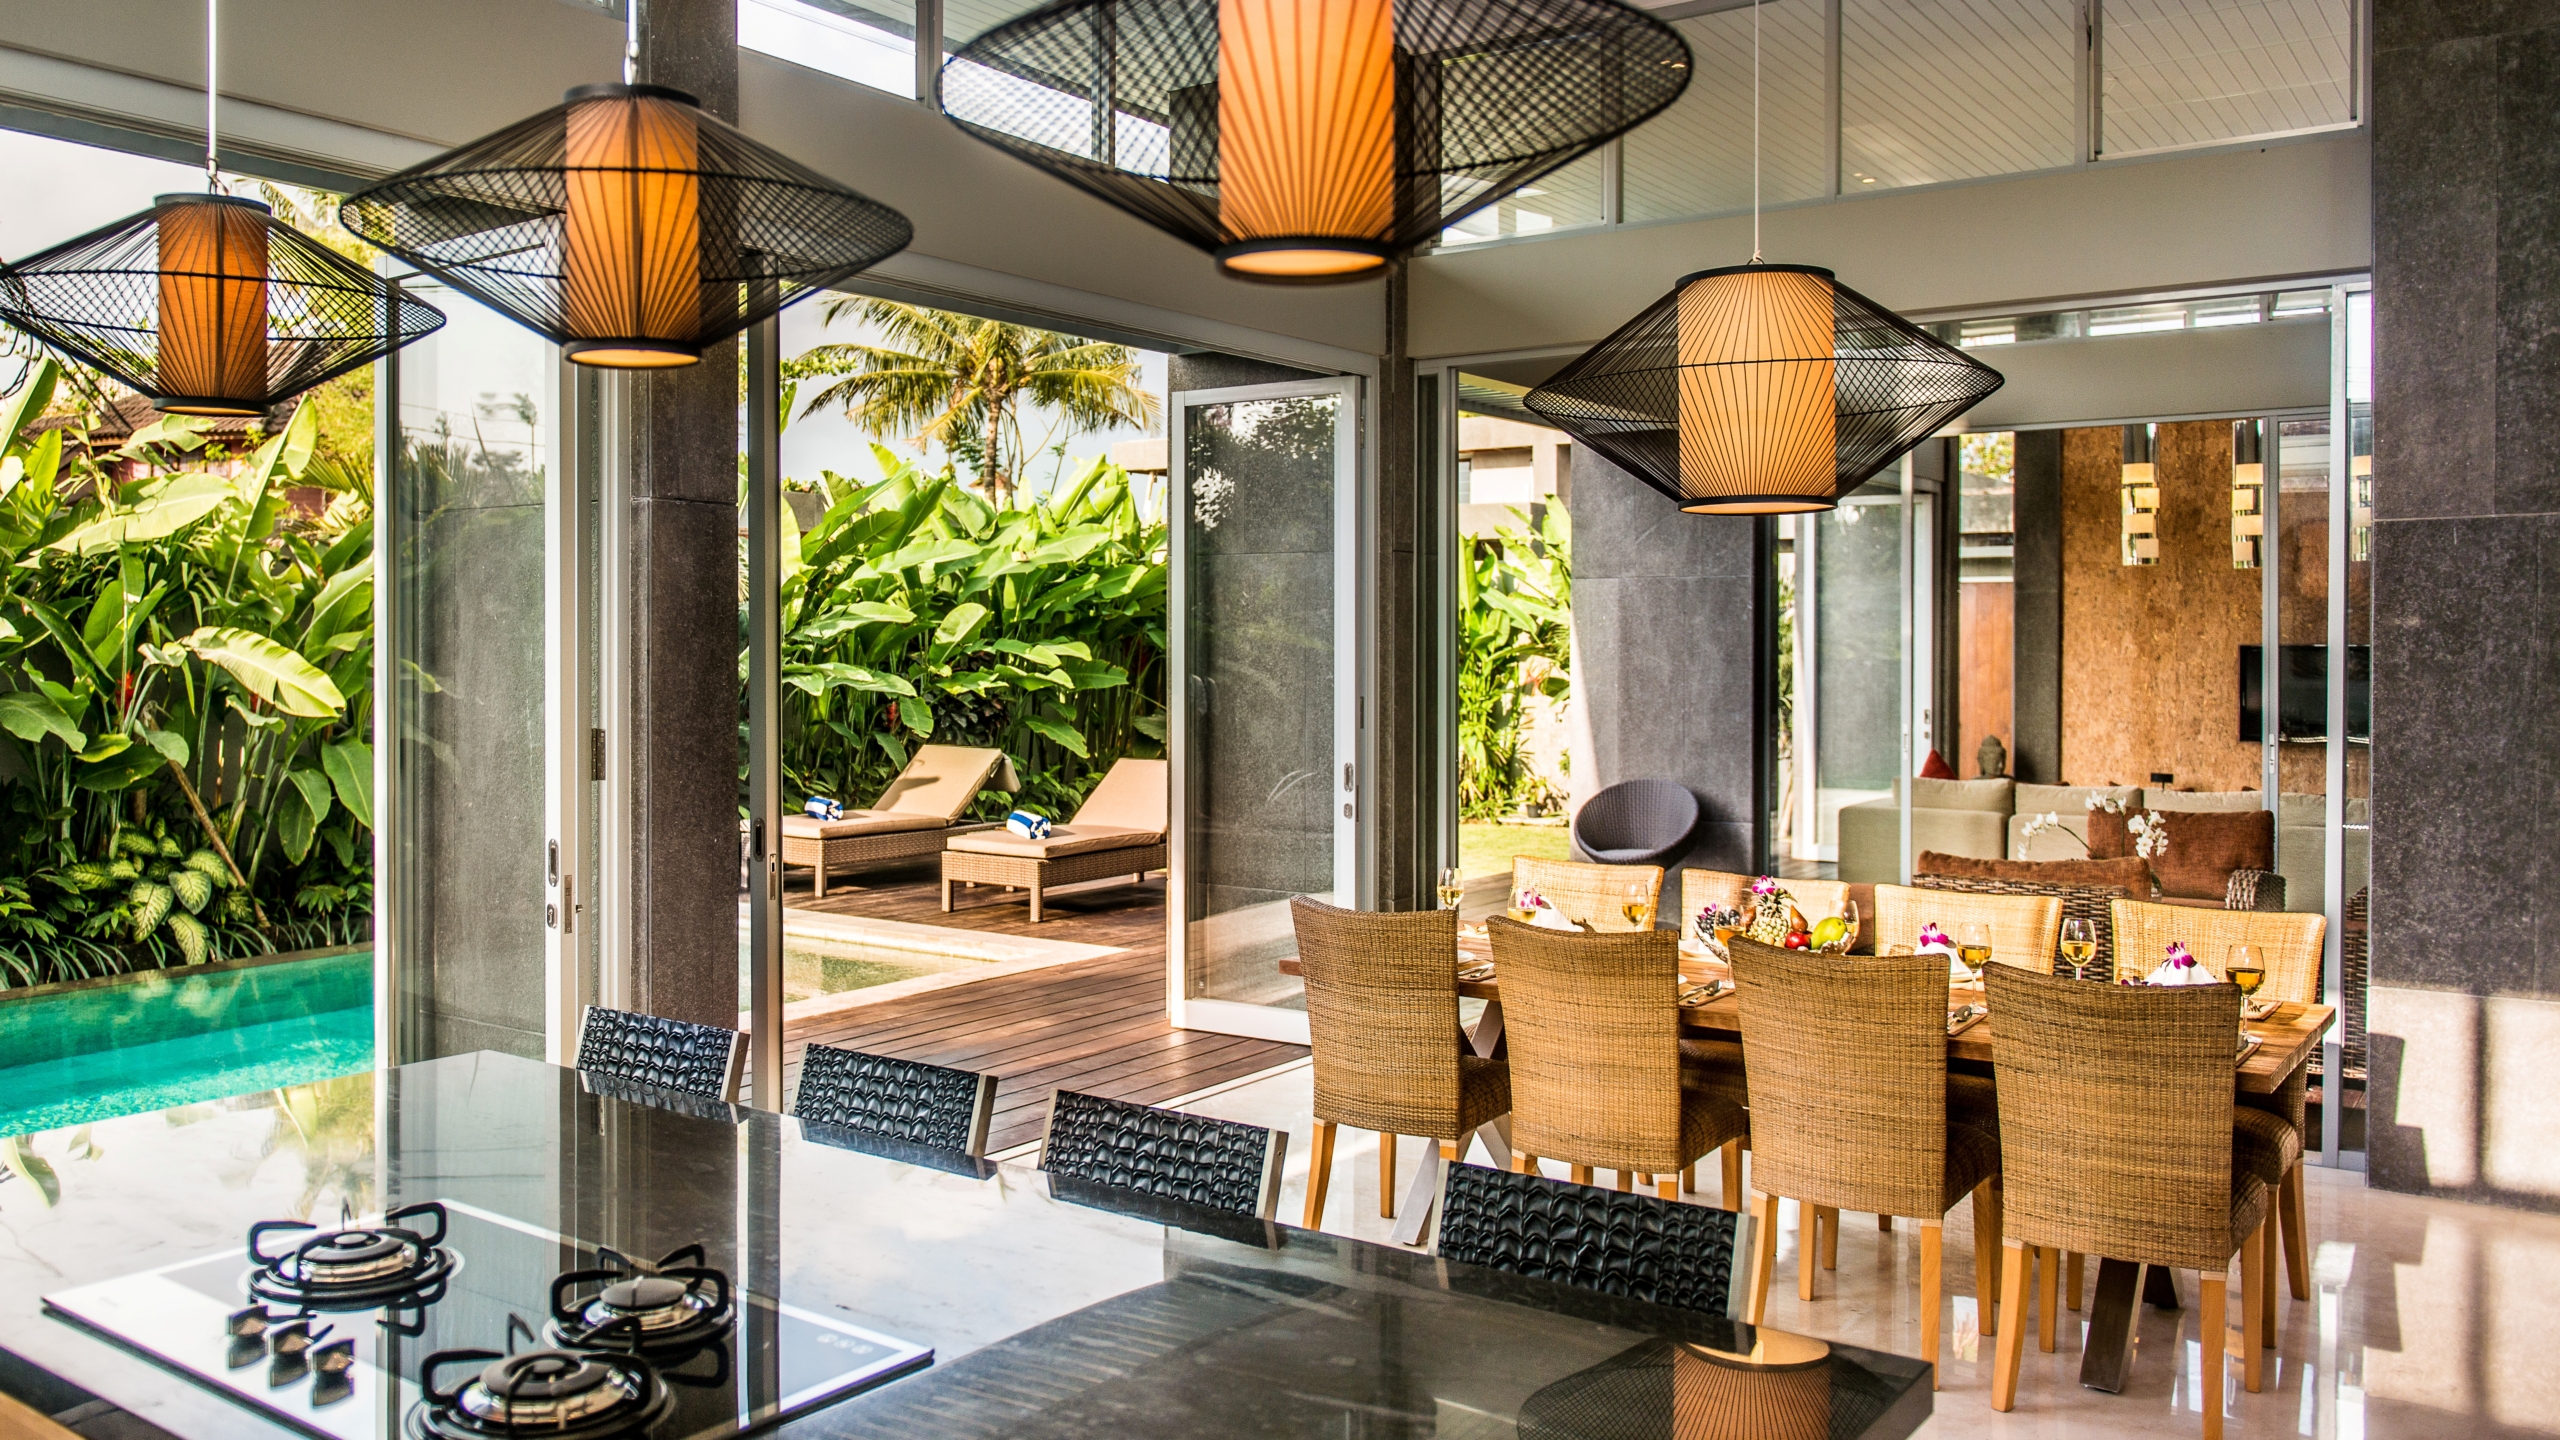 Kitchen and Dining Area with Pool View - Villa Damai Aramanis - Seminyak, Bali